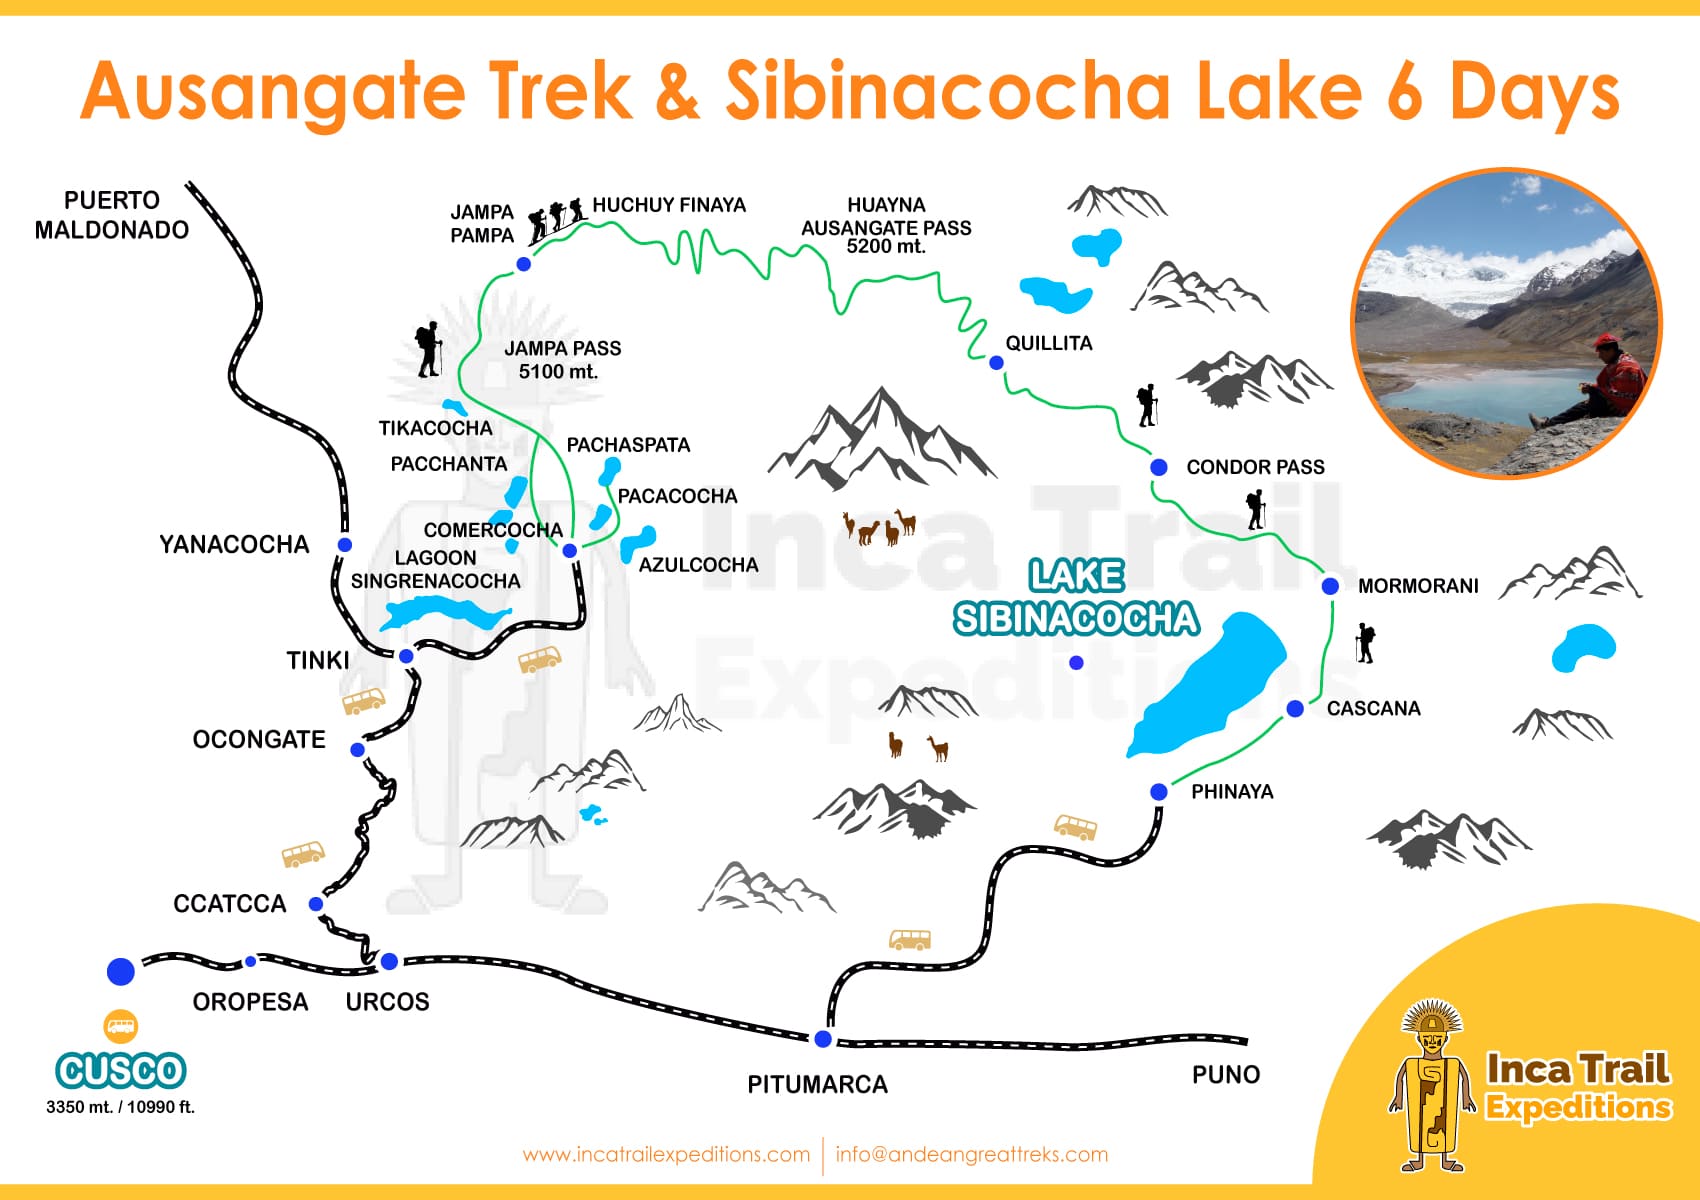 AUSANGATE-TREK-SIBINACOCHA-LAKE-6-DAYS-BY-INCA-TRAIL-EXPEDITIONS